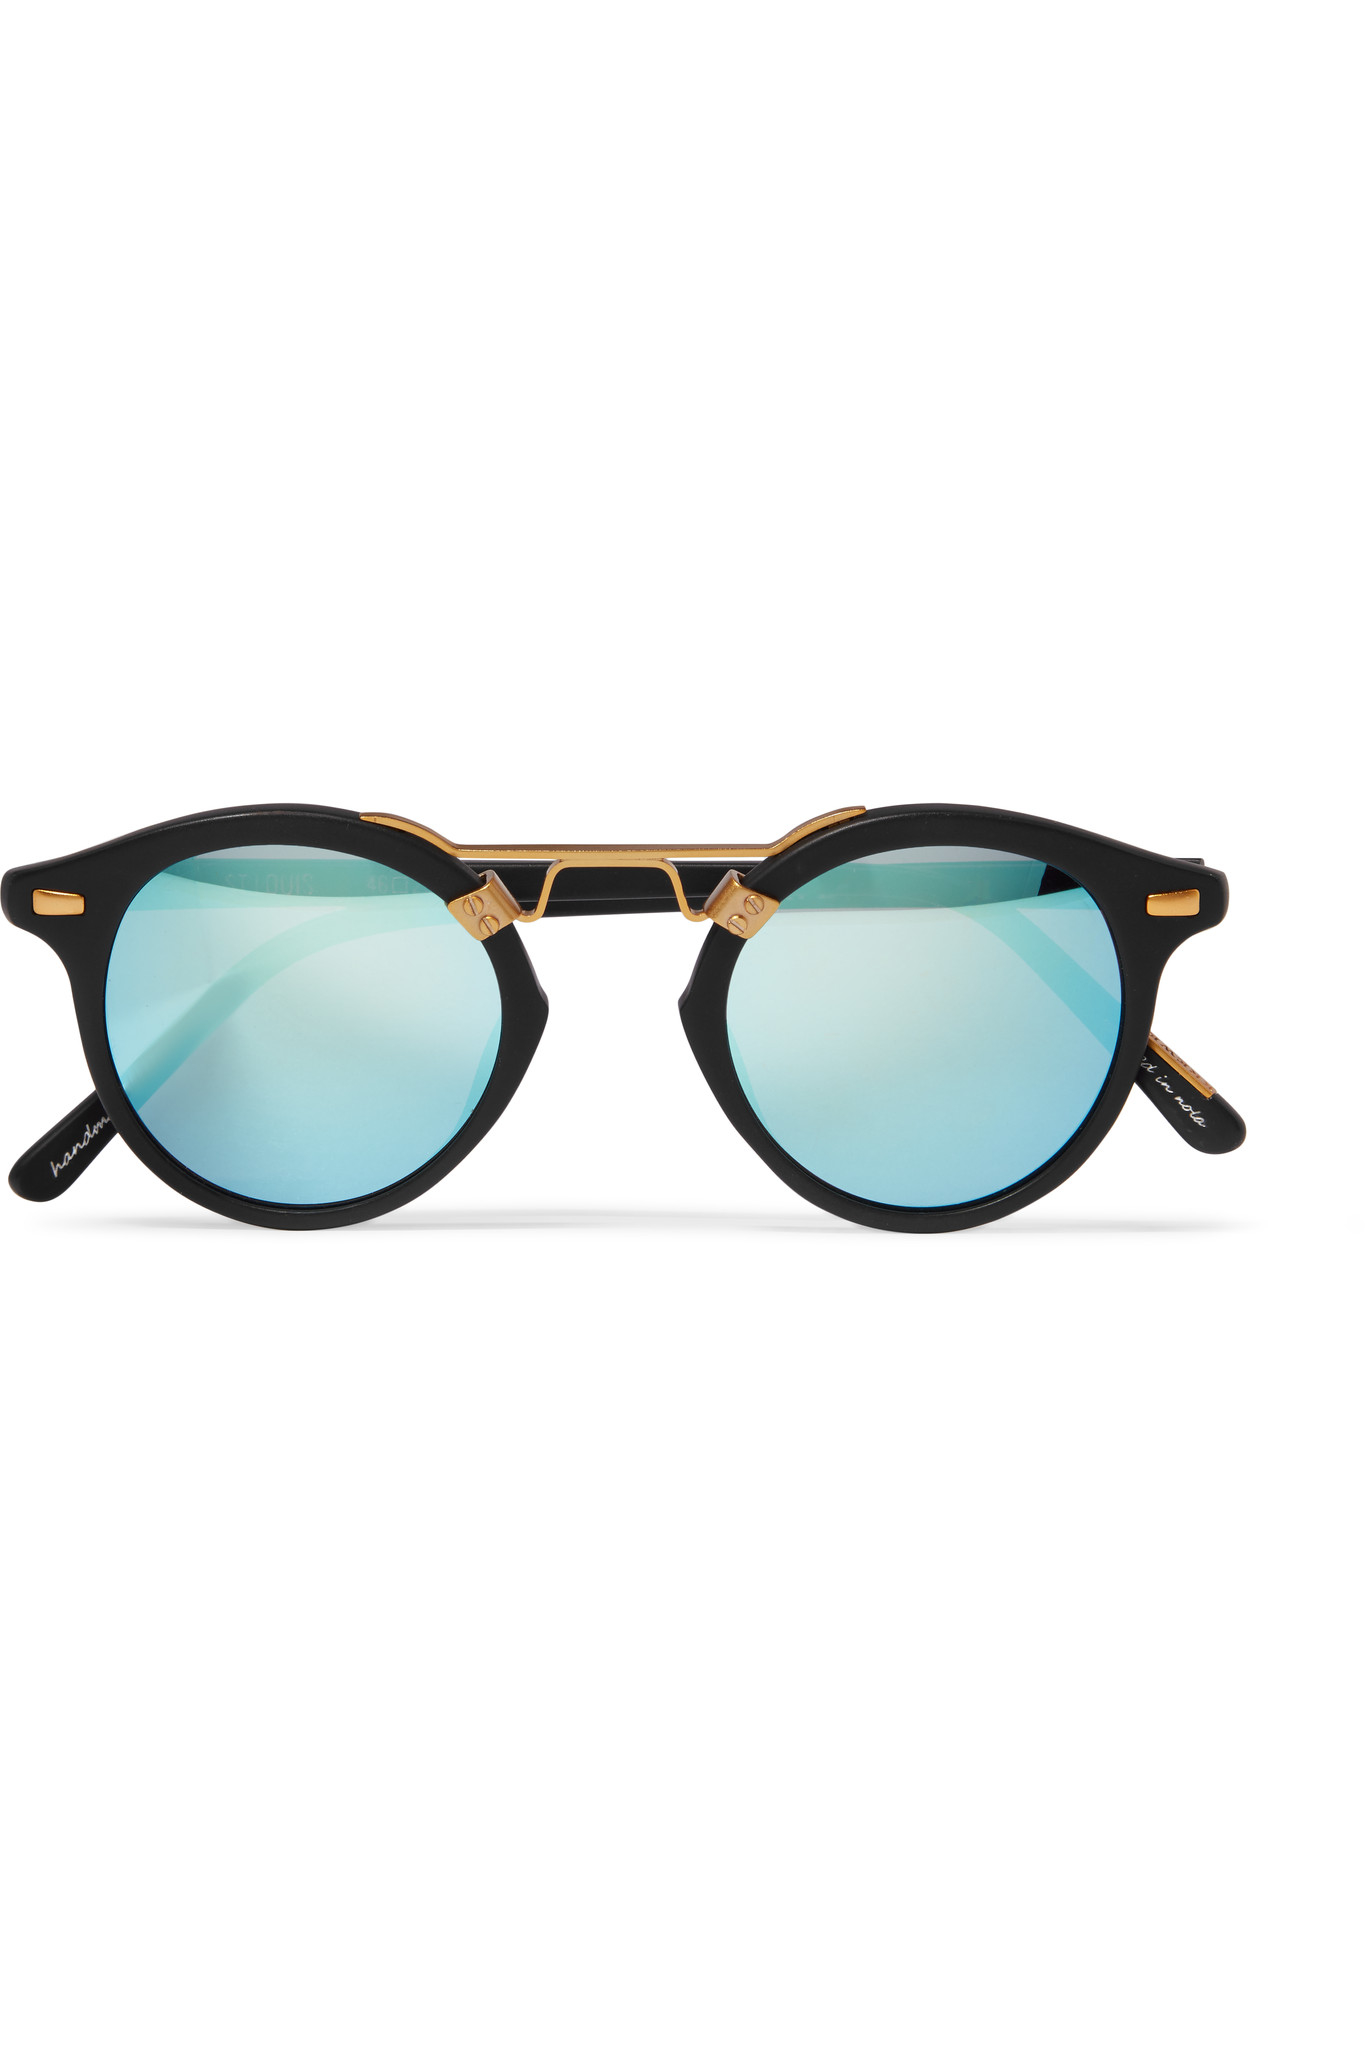 Lyst - Krewe St. Louis Round Mirrored Sunglasses in Black